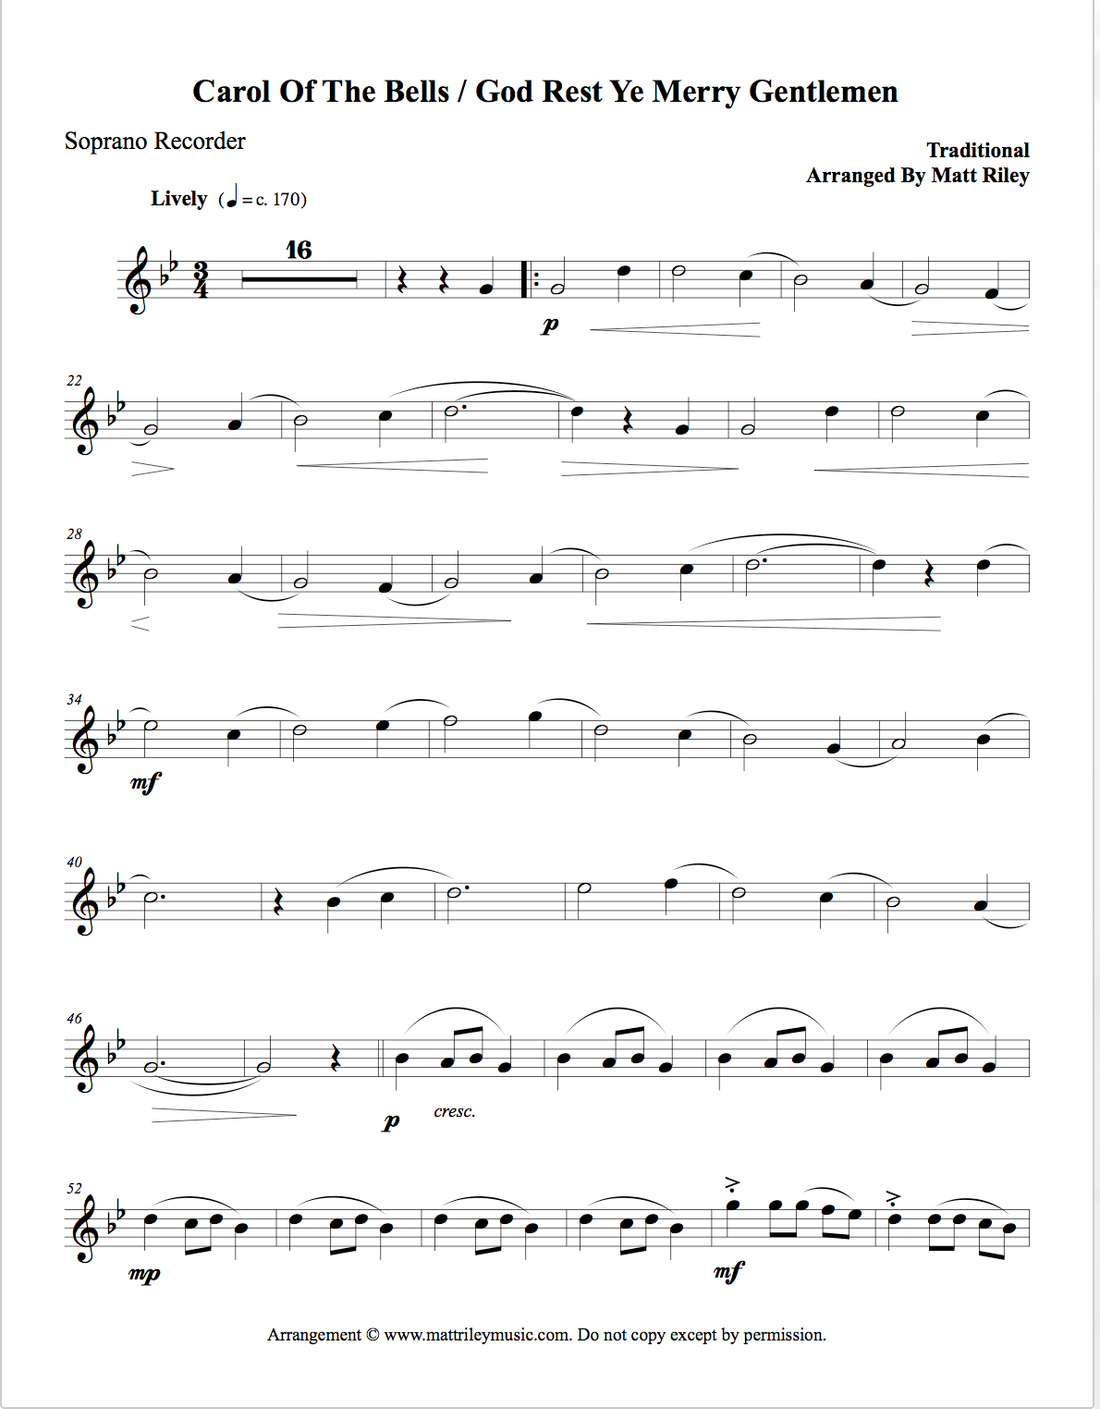 Soprano recorder page 1 preview
